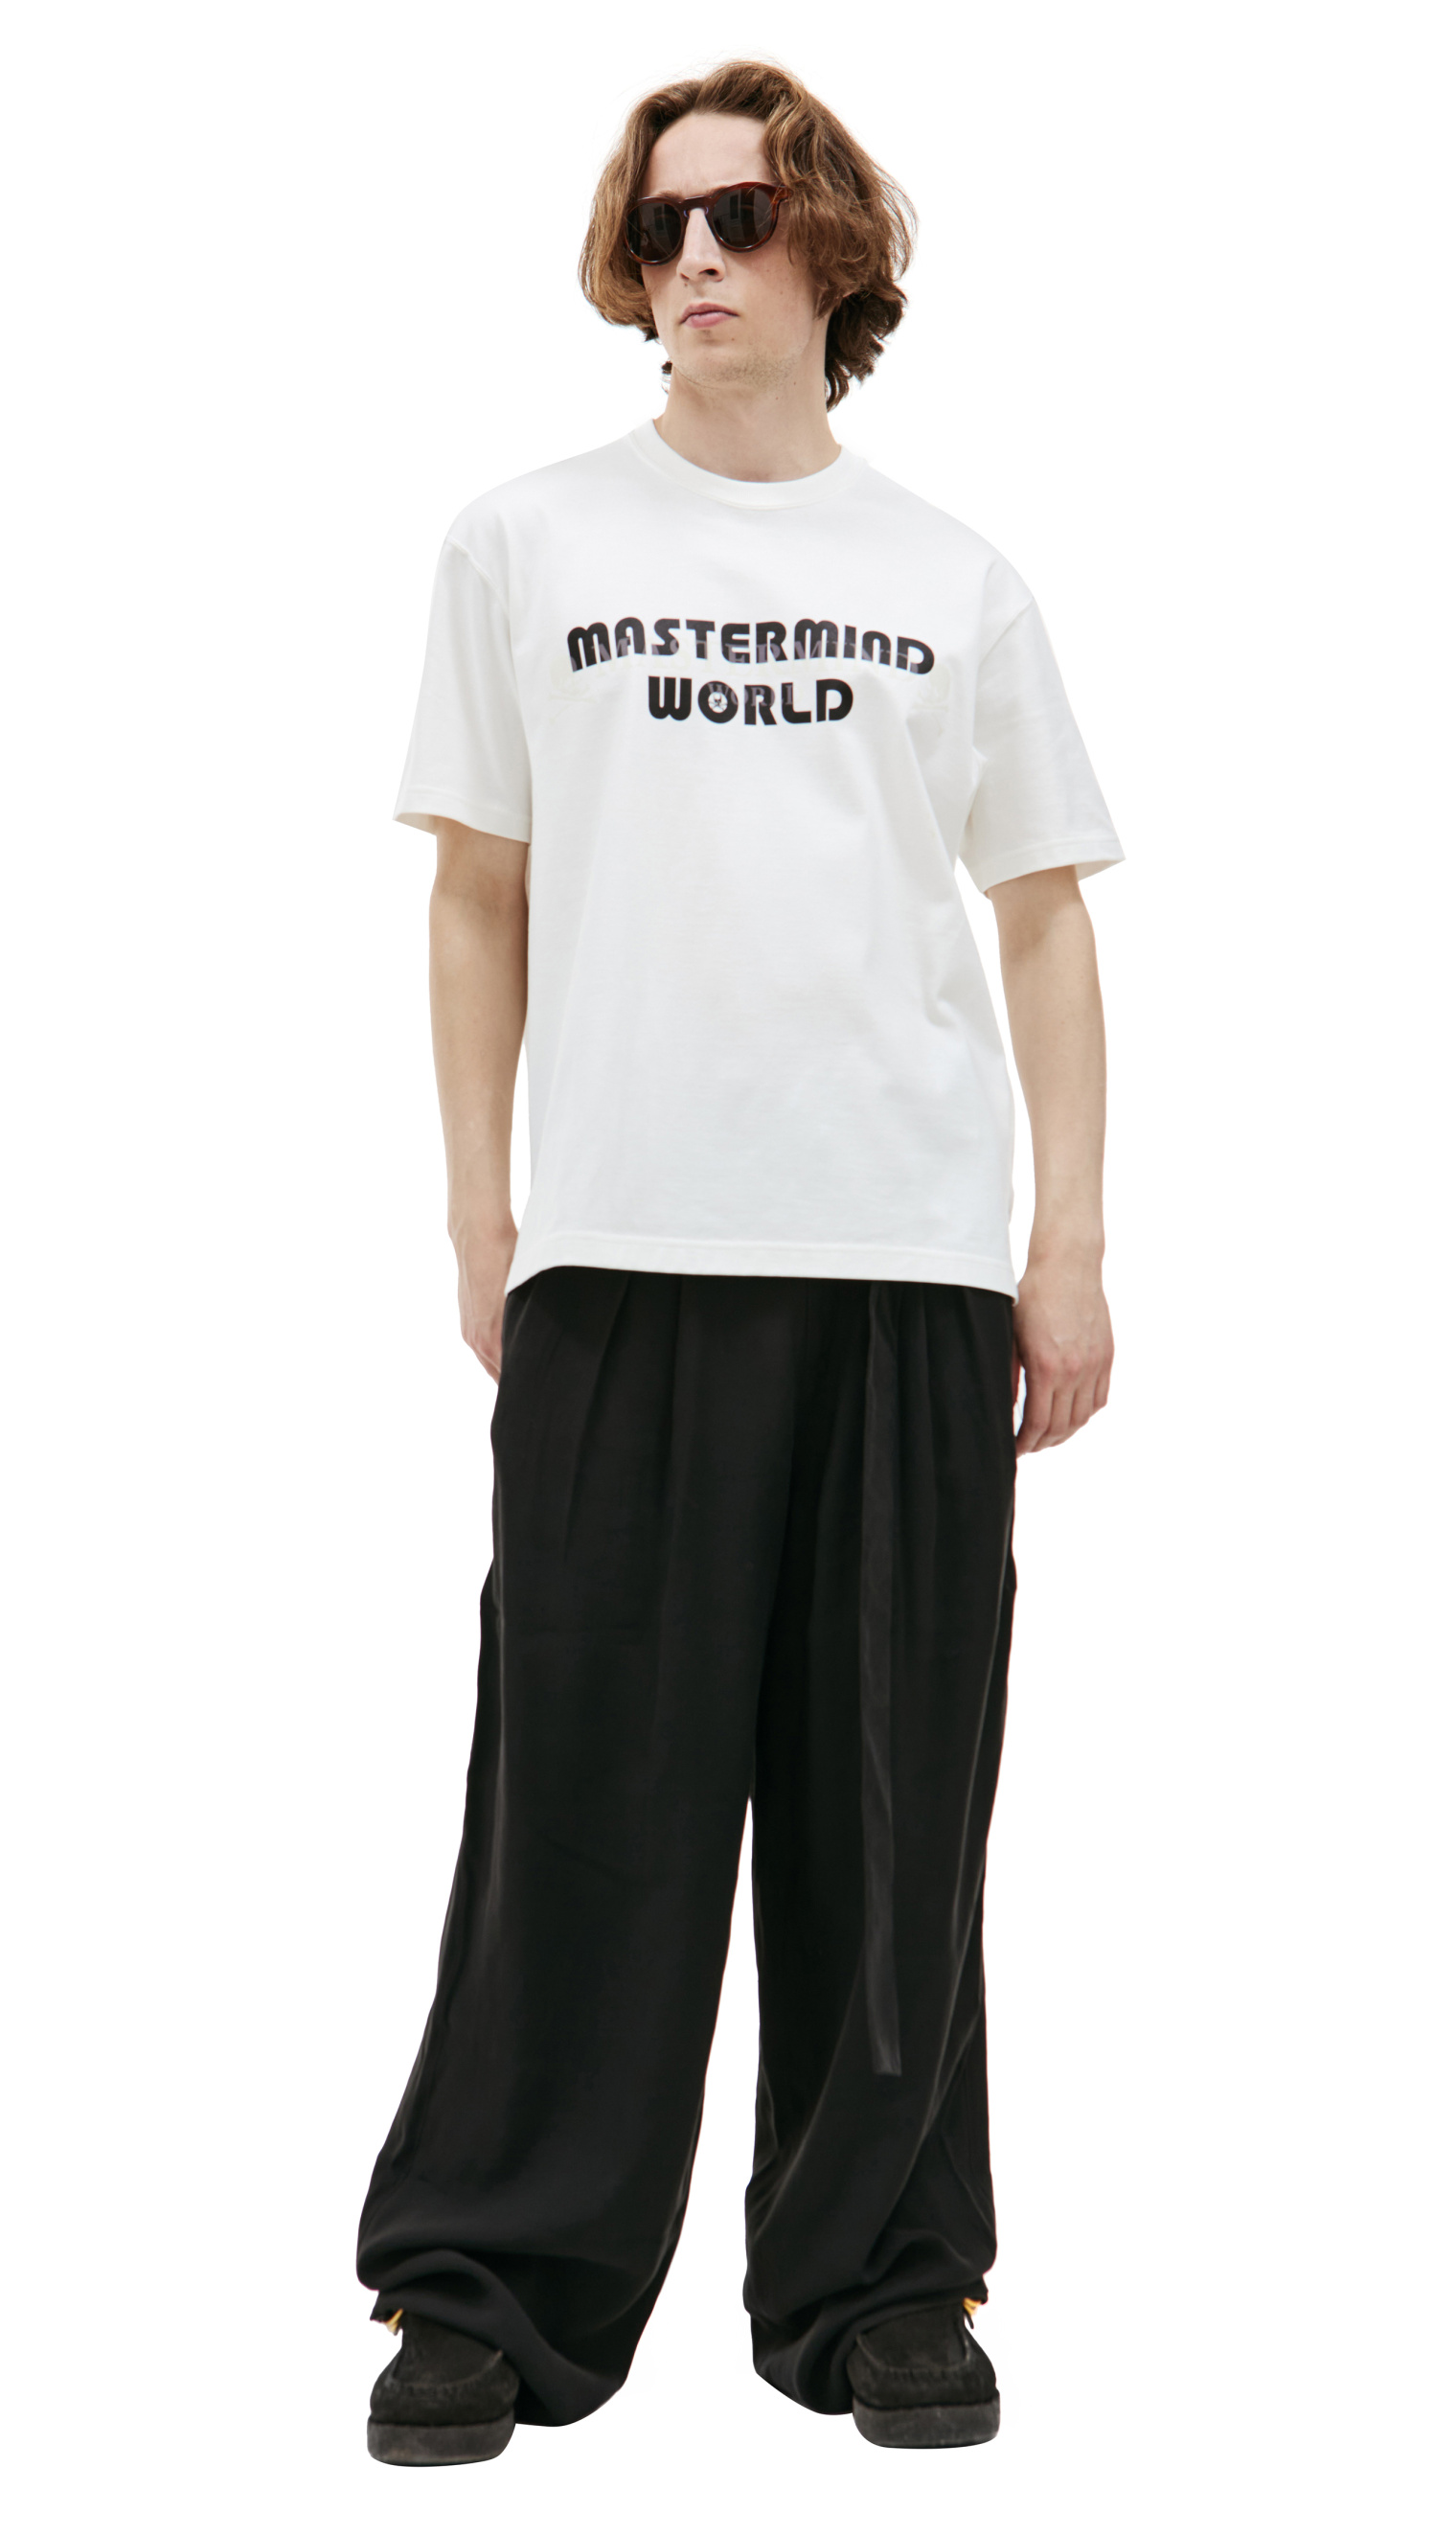 Mastermind WORLD T-shirt